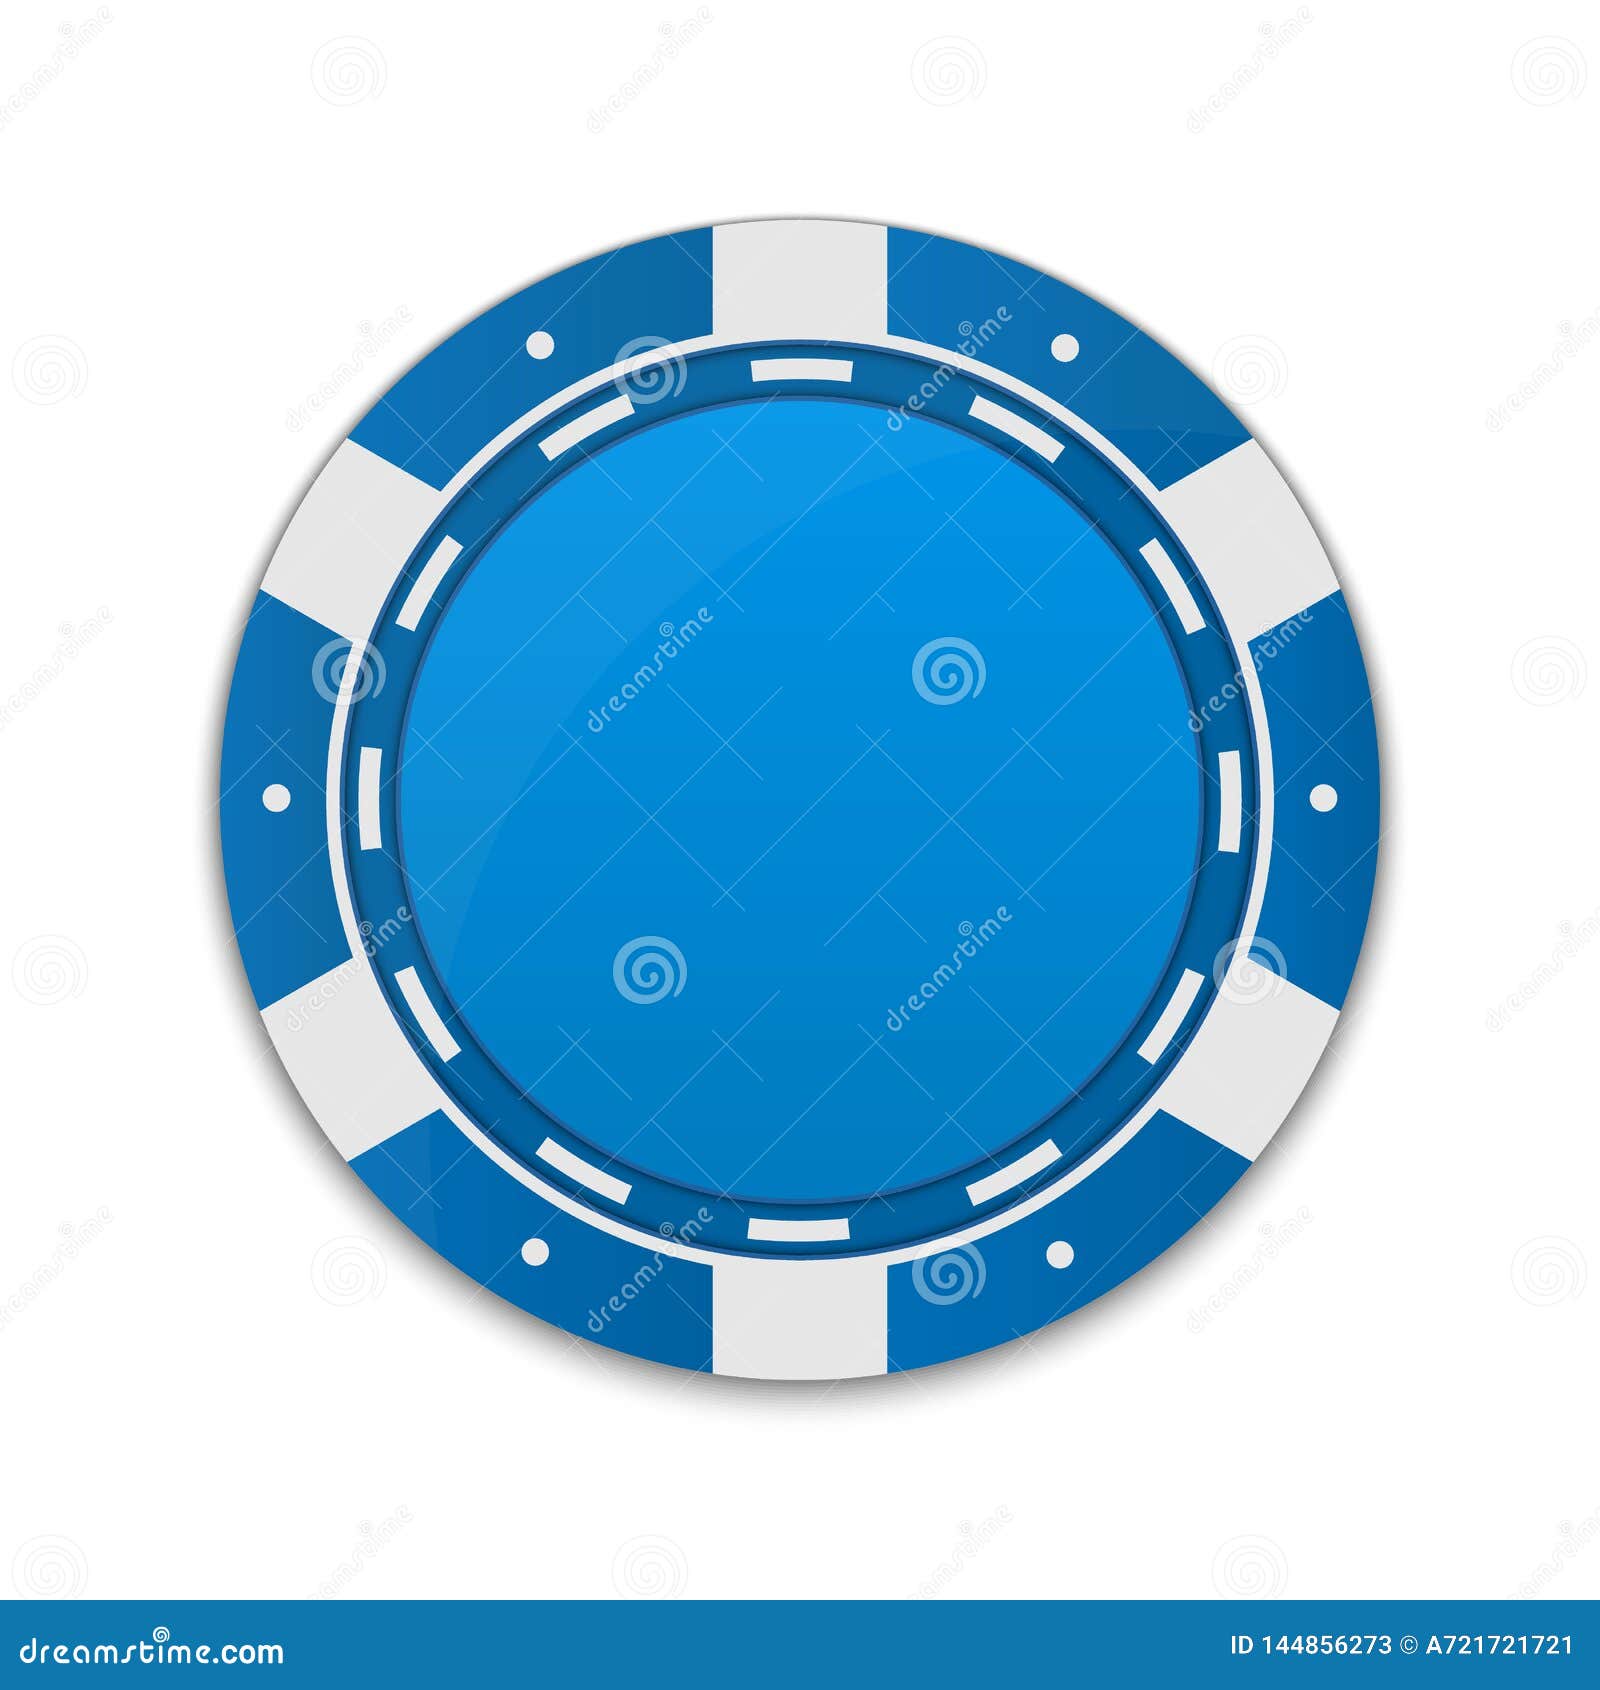 Download Creative Illustration Of Set Casino Poker Chips In Flip ...